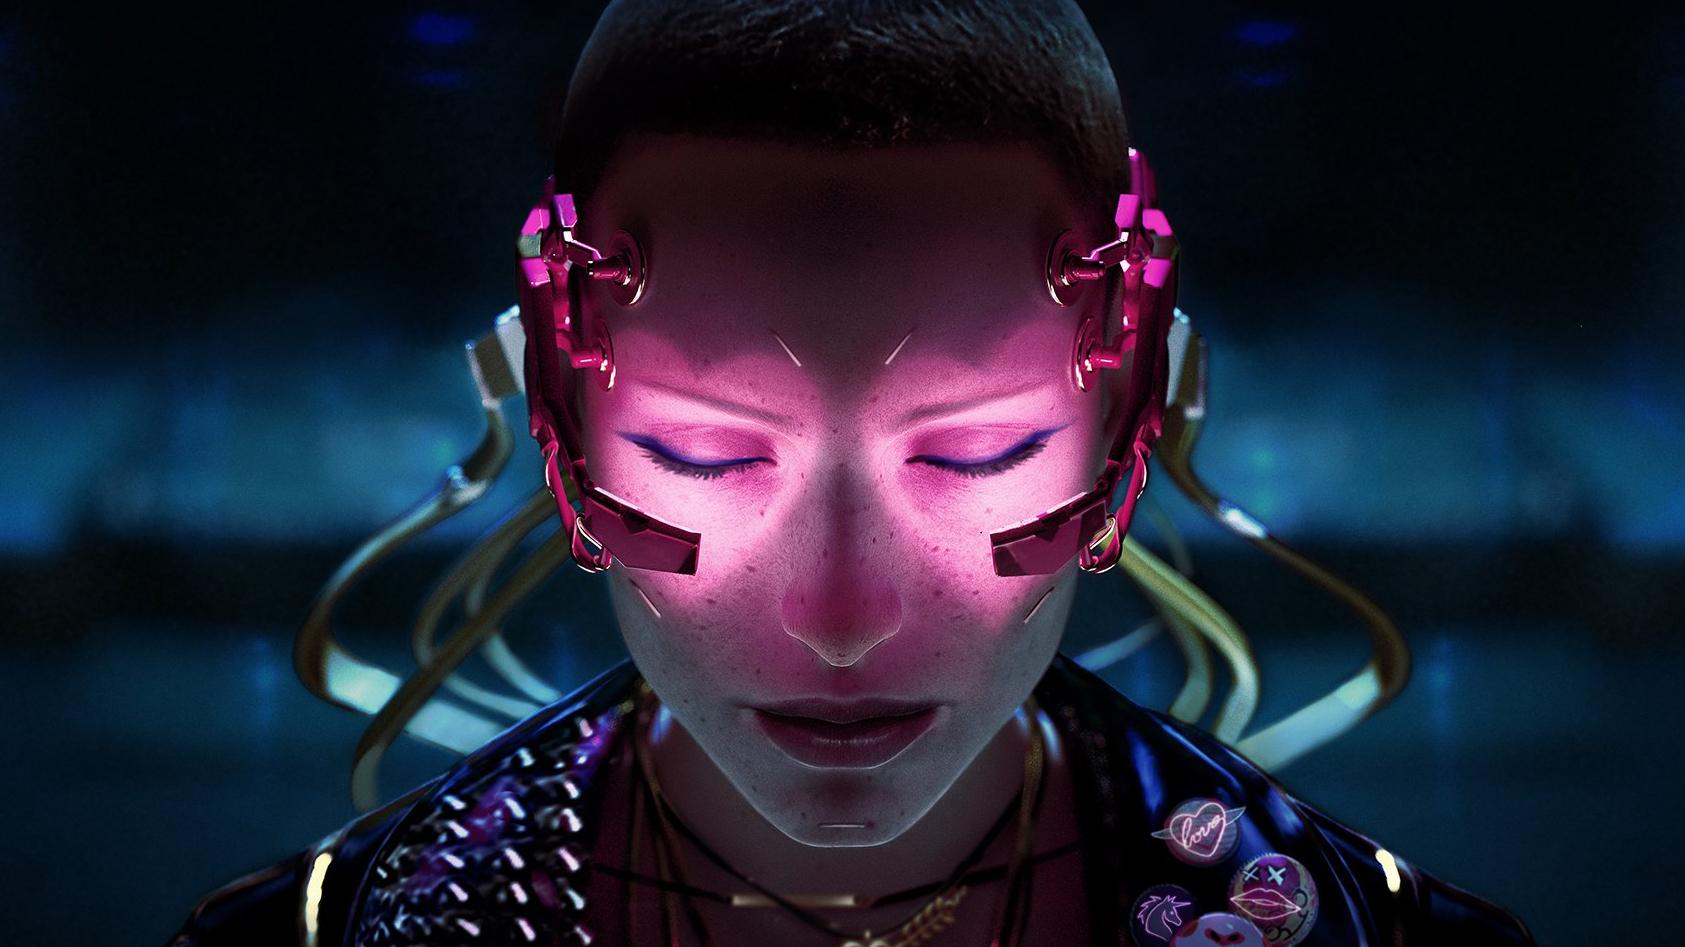 Cyberpunk Fashion - MAGIC FABRIC